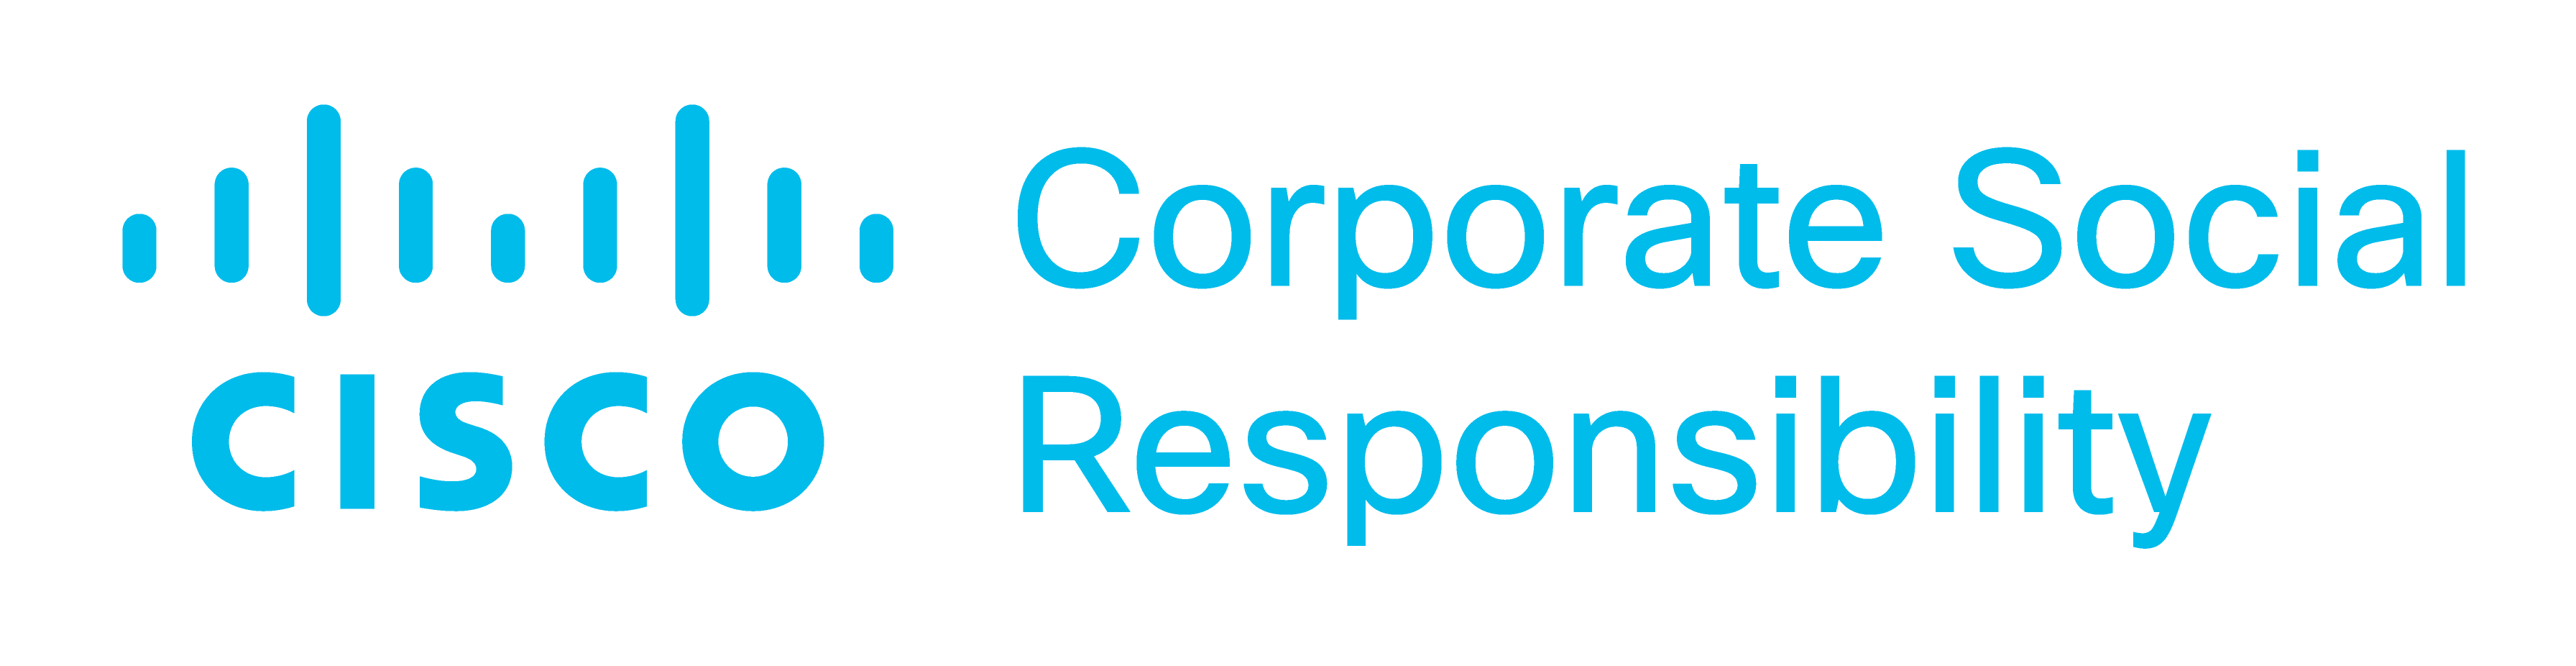 Cisco Corporate Social Responsibility